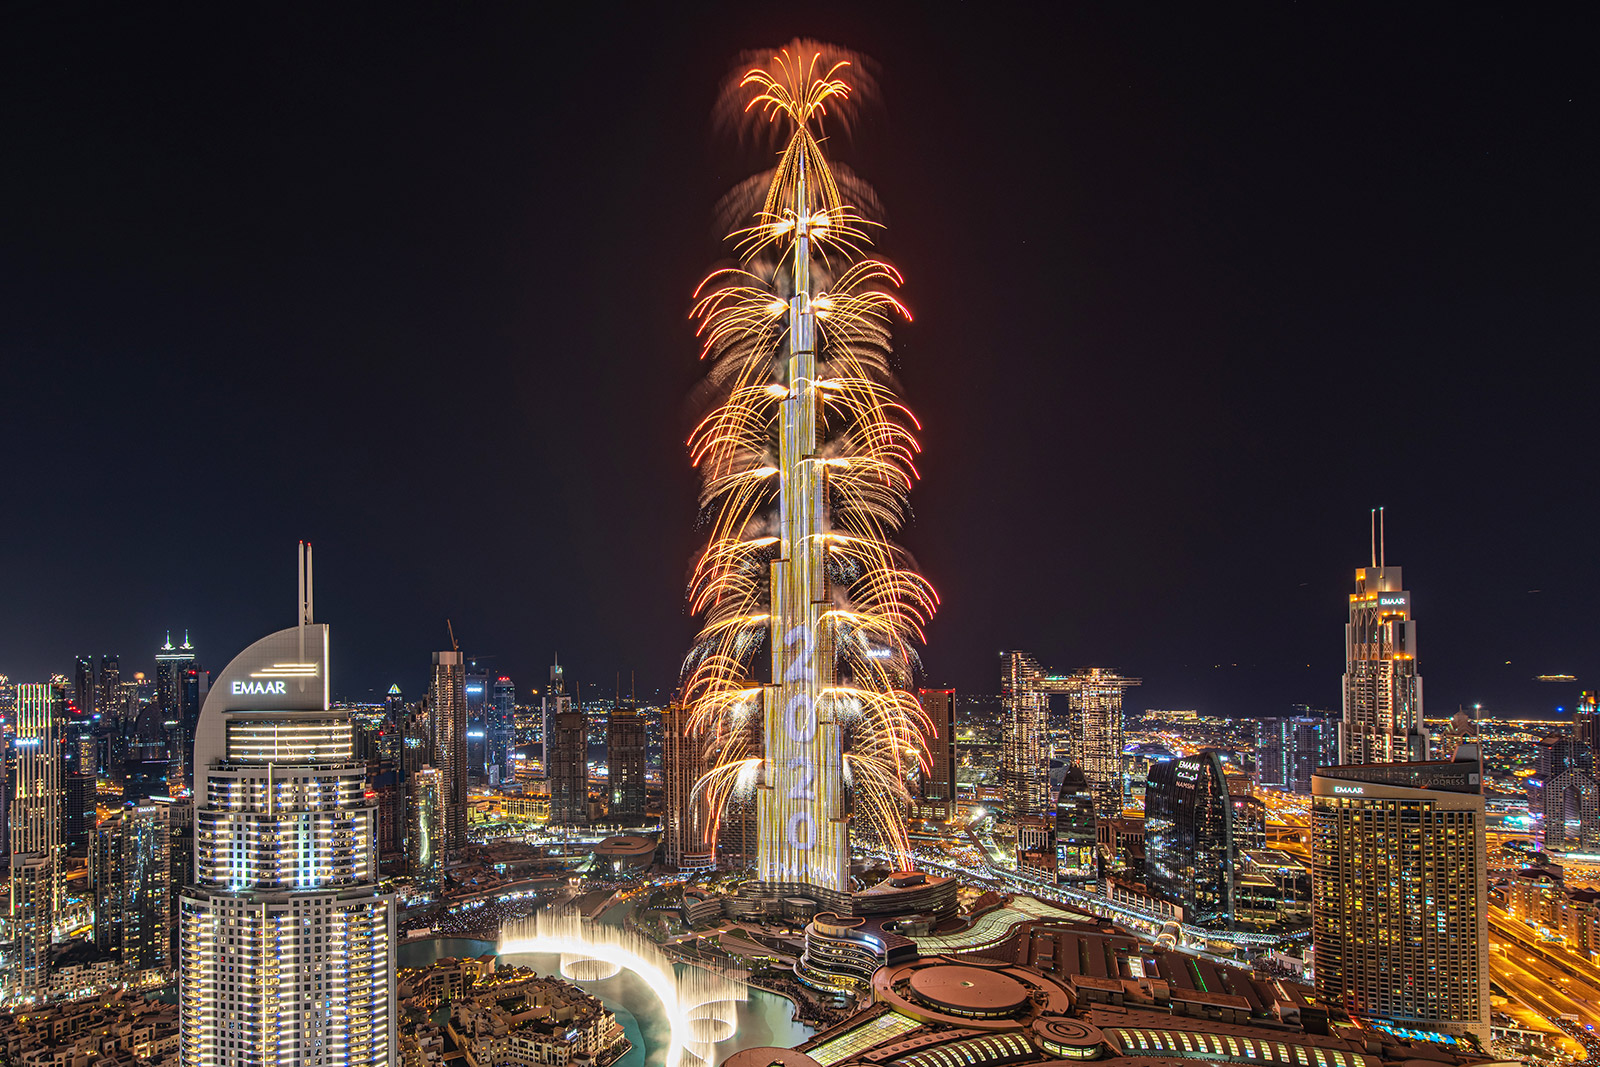 Burj Khalifa New Year's Eve Fireworks